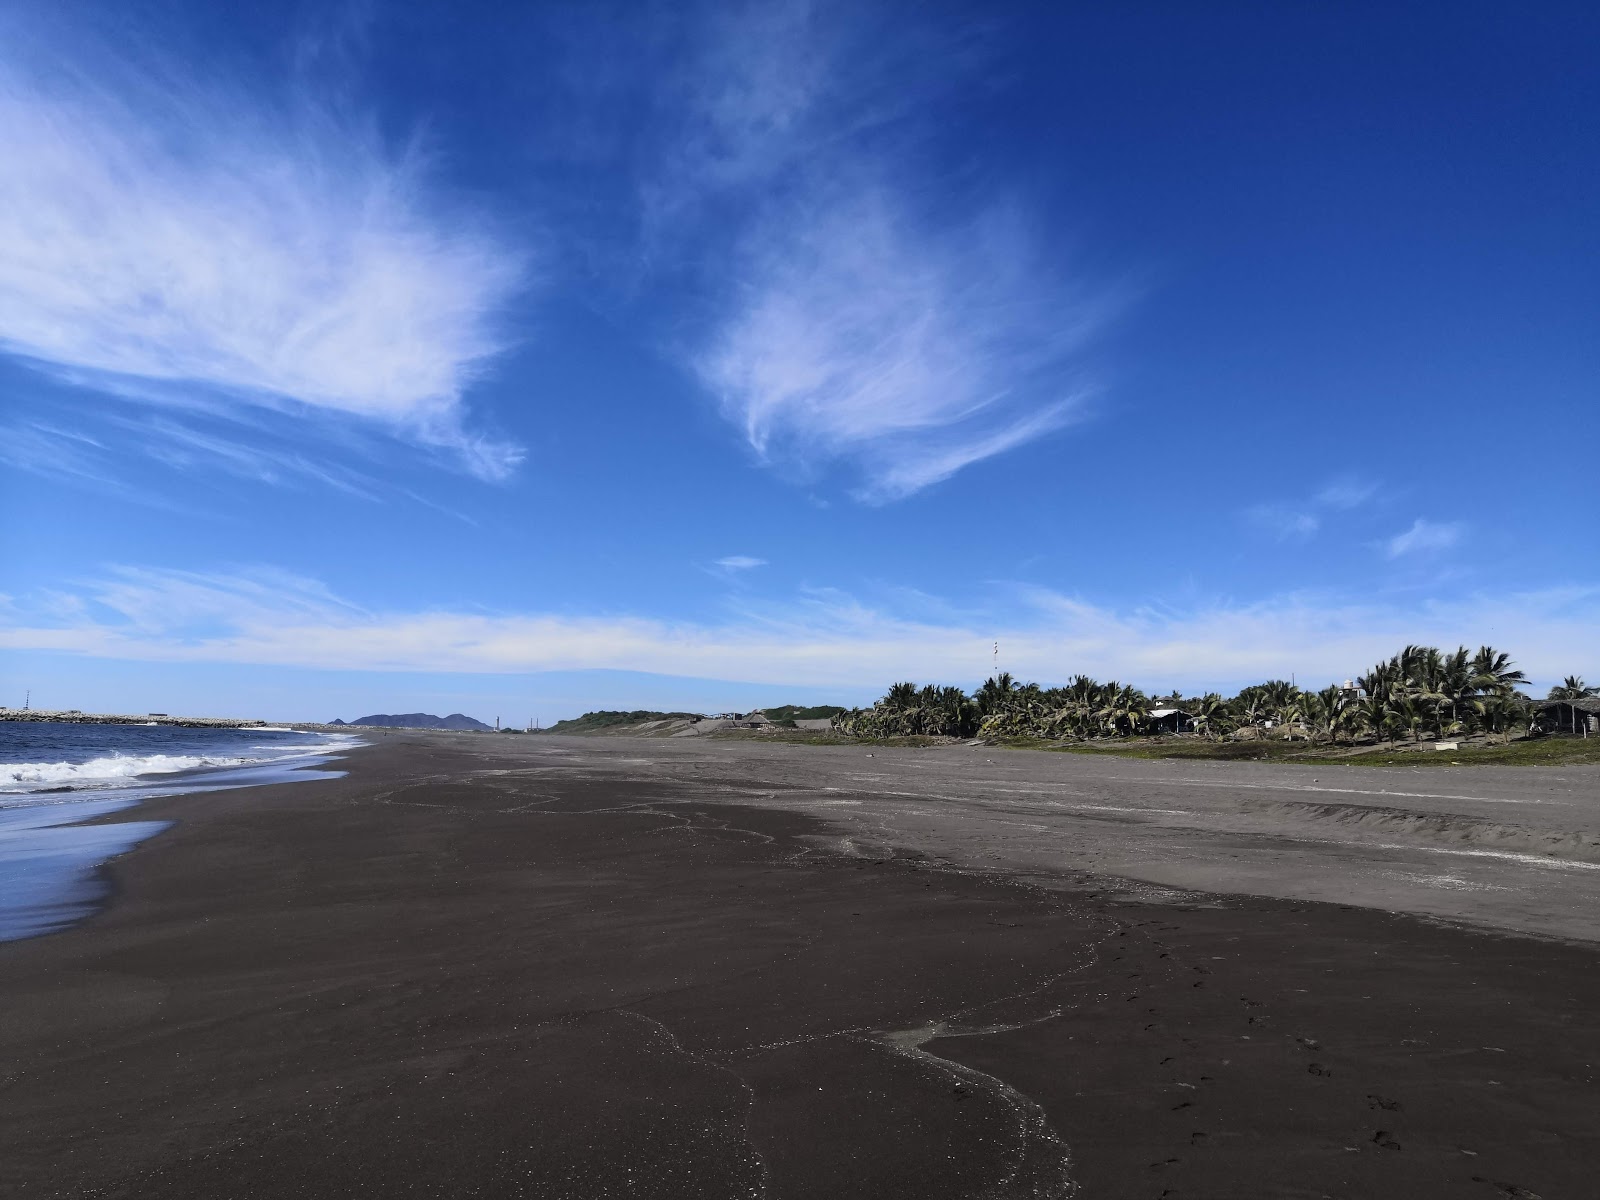 Fotografie cu Playa "El Eden" cu o suprafață de nisip maro